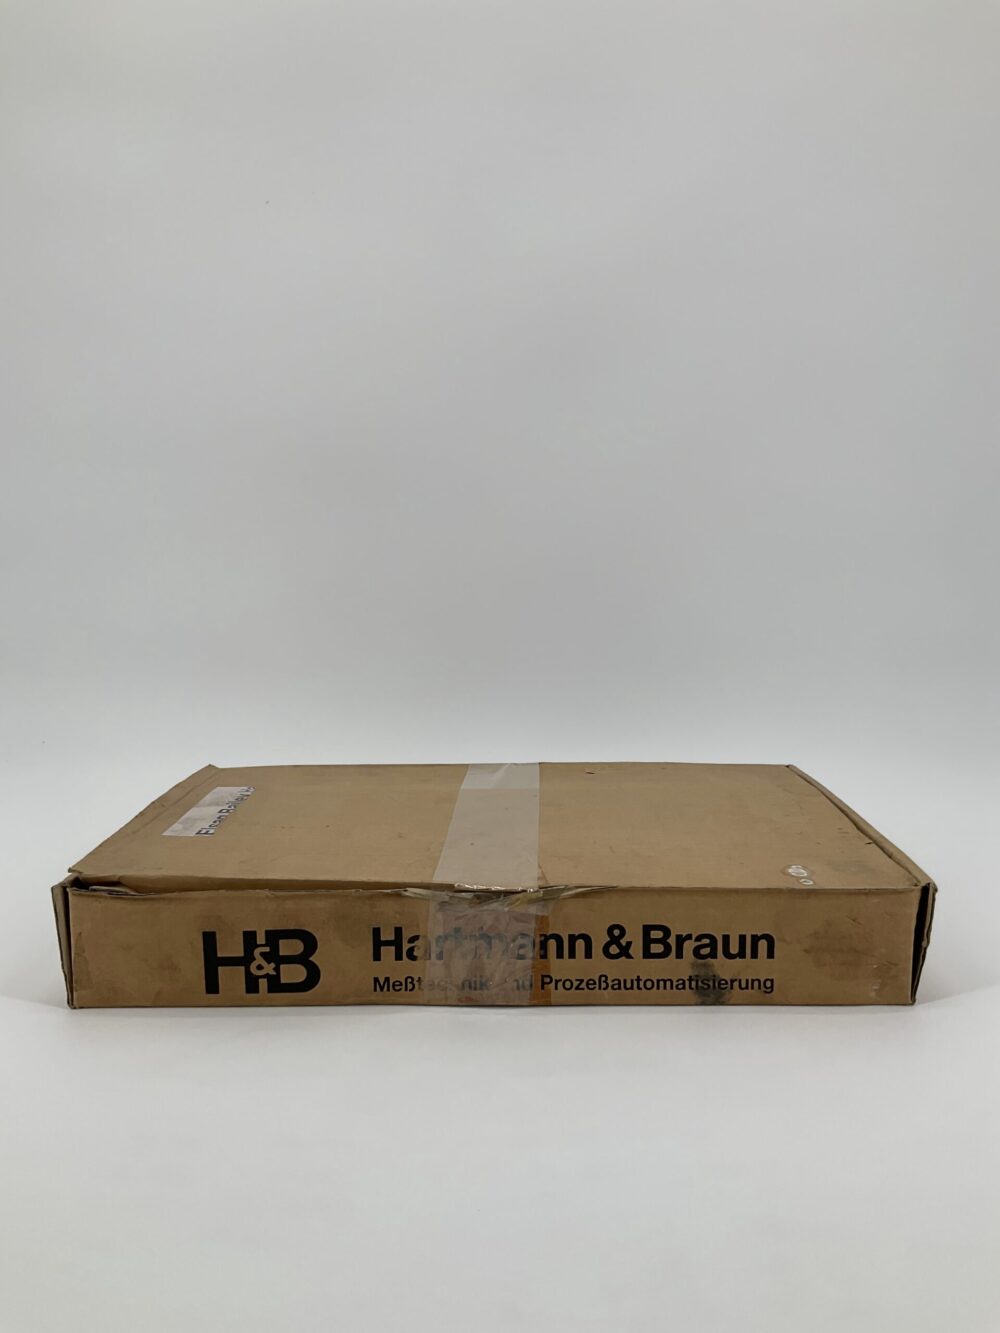 New Original Sealed Package HARTMANN&BRAUN 37111-4-0369626